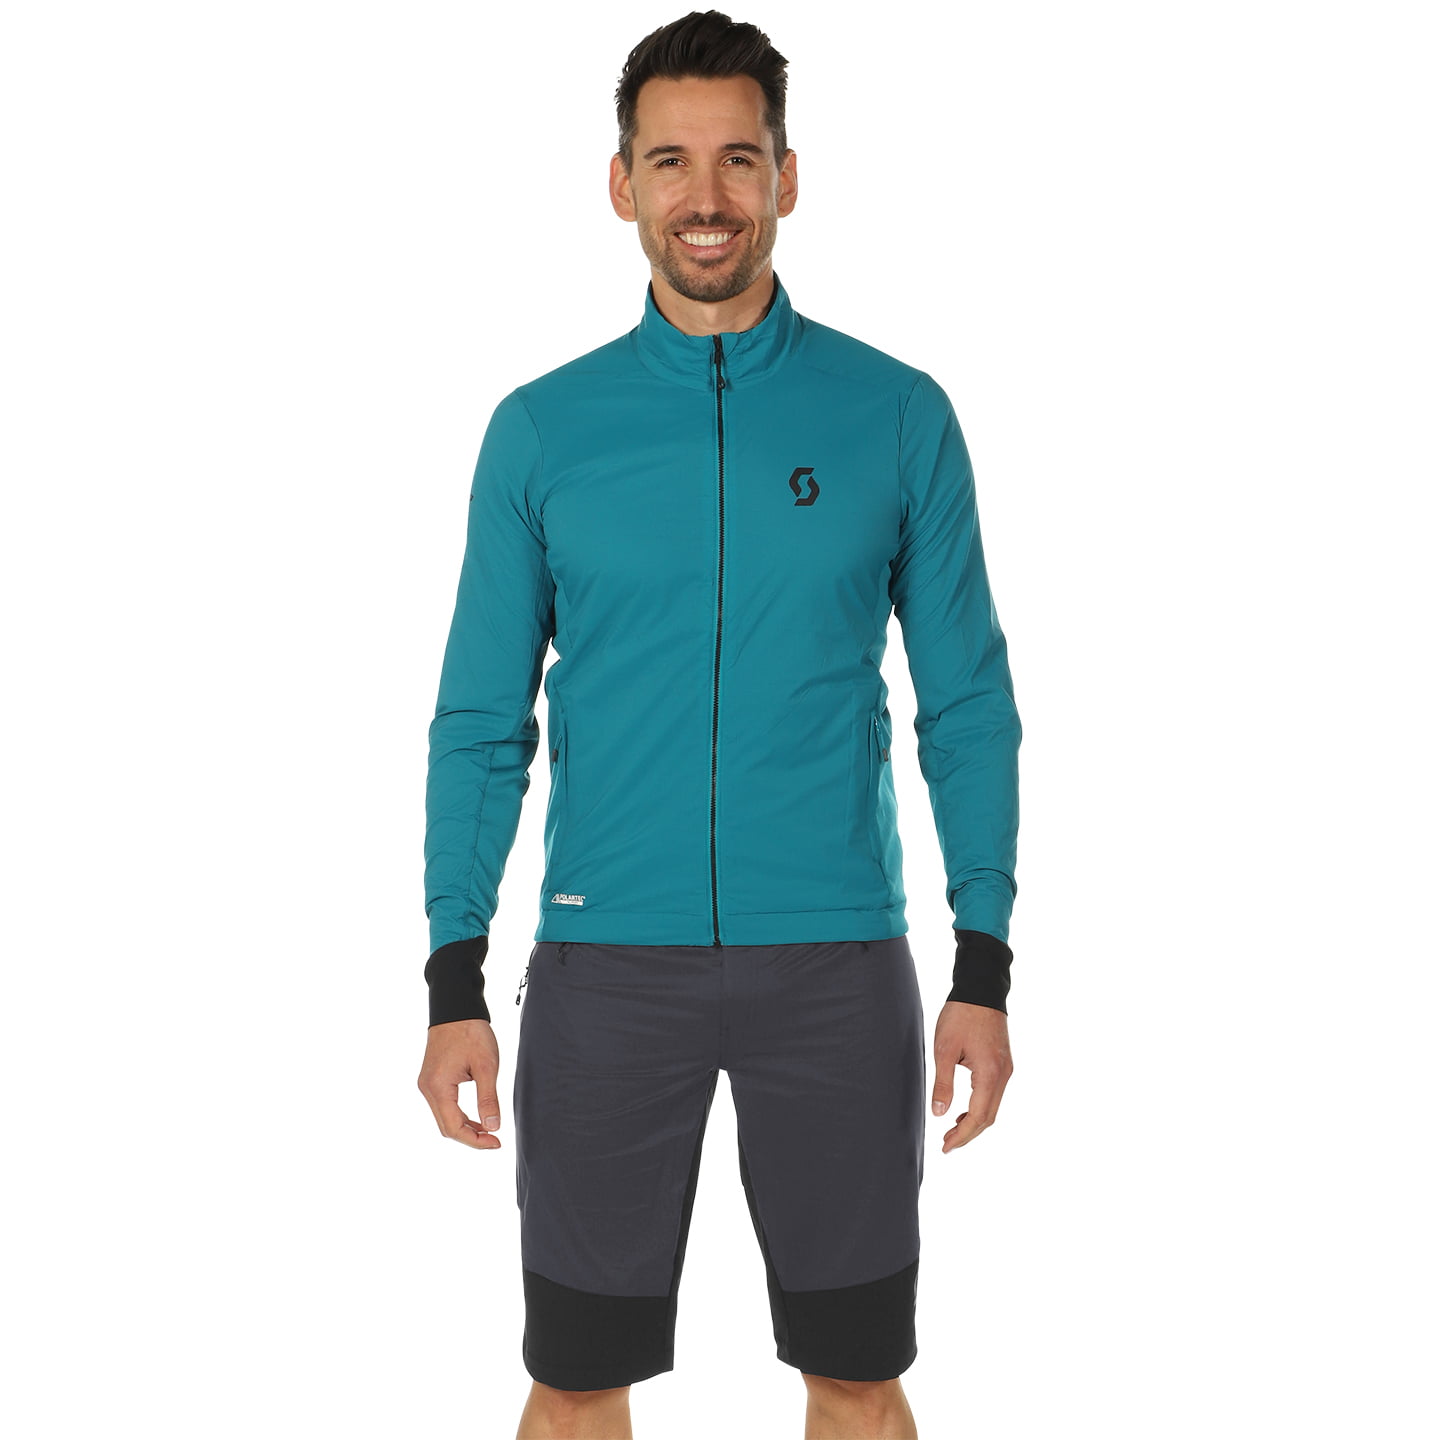 SCOTT Trail Storm Insuloft Alpha Set (winter jacket + cycling tights) Set (2 pieces), for men